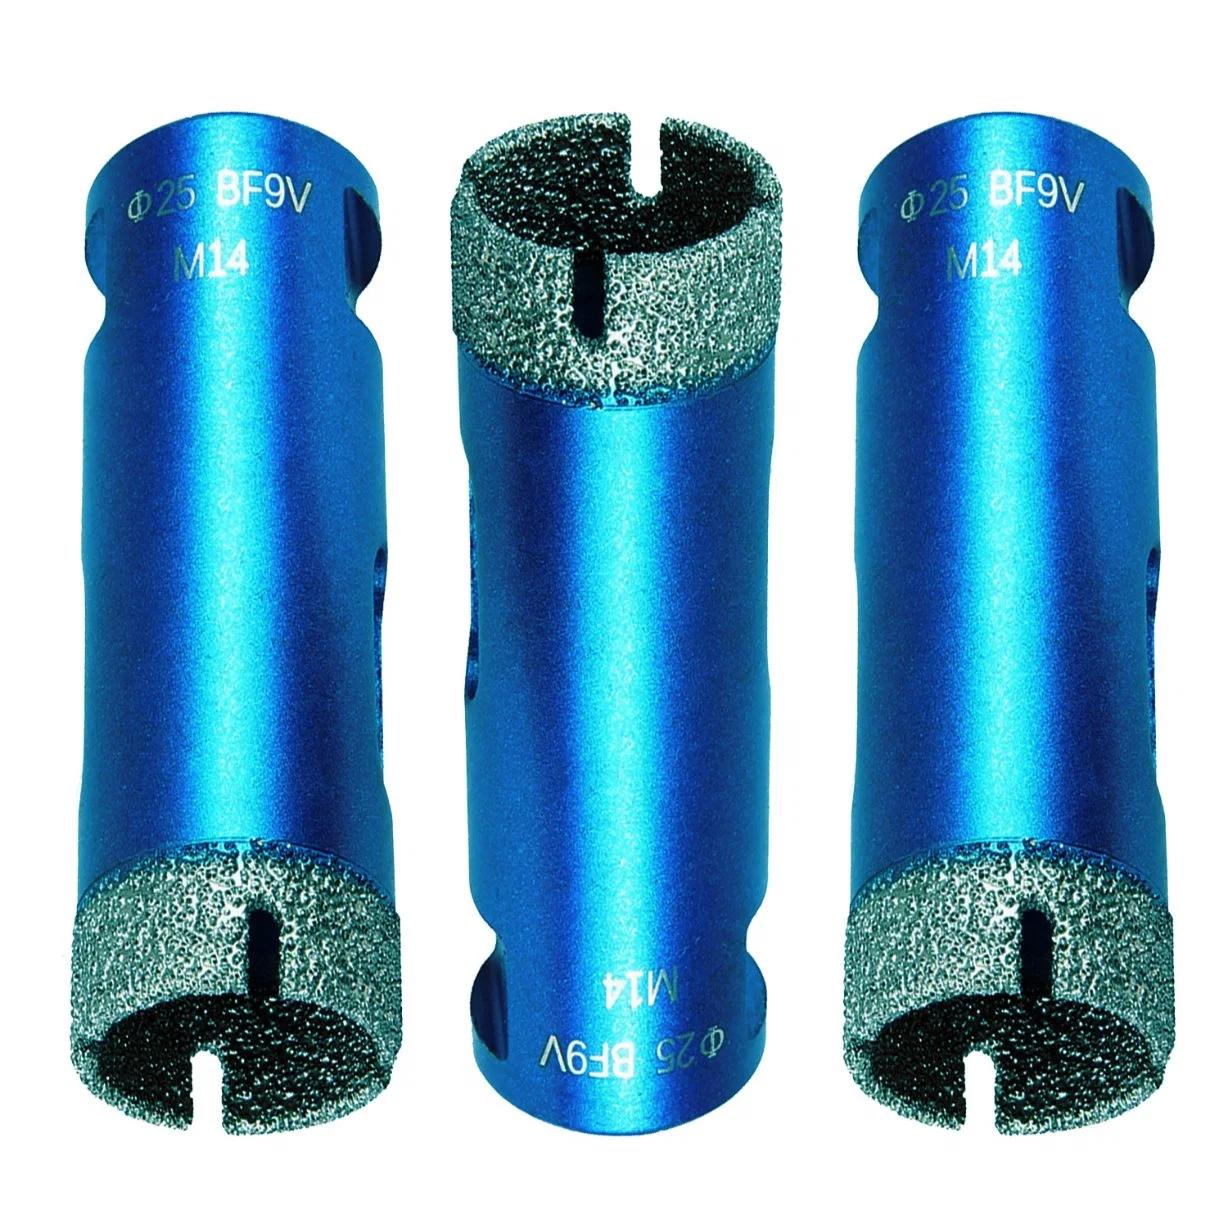 Factory Wholesale/Supplier Diamond Coring Drills for Drilling Stone, Tile, Glass Bottles, Shell, Ceramic, Concrete